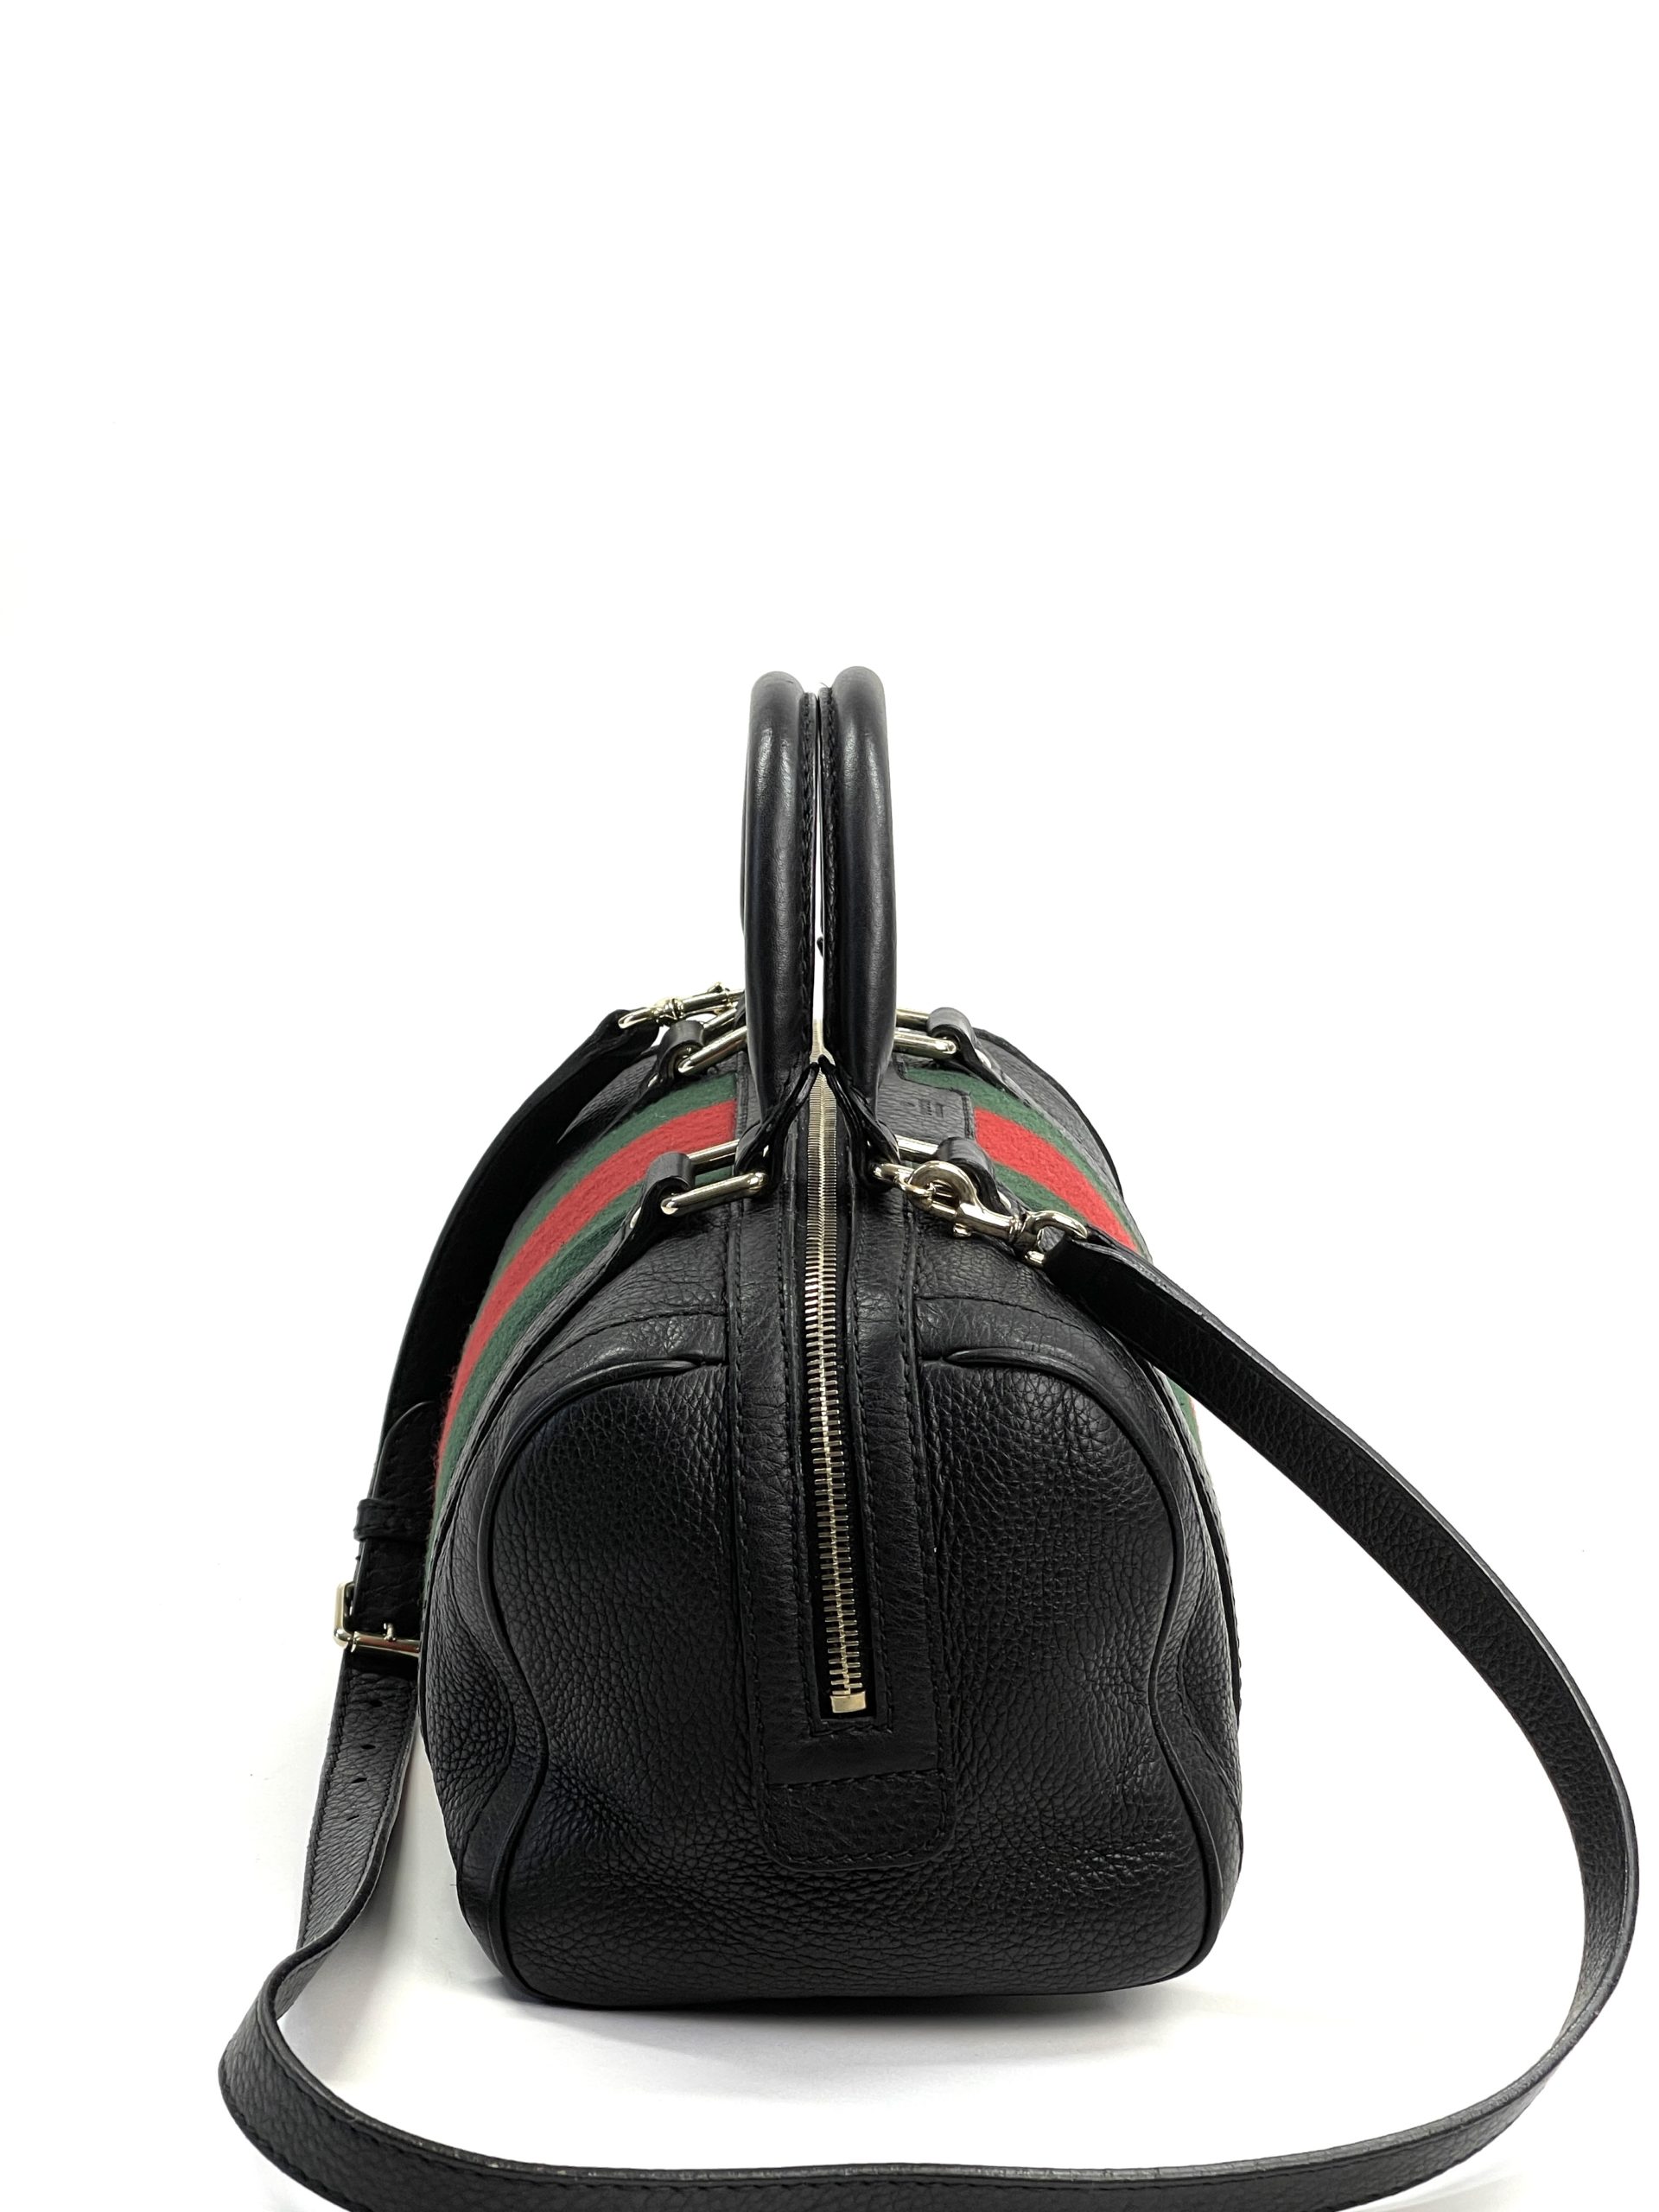 Gucci Boston Handbag 366142